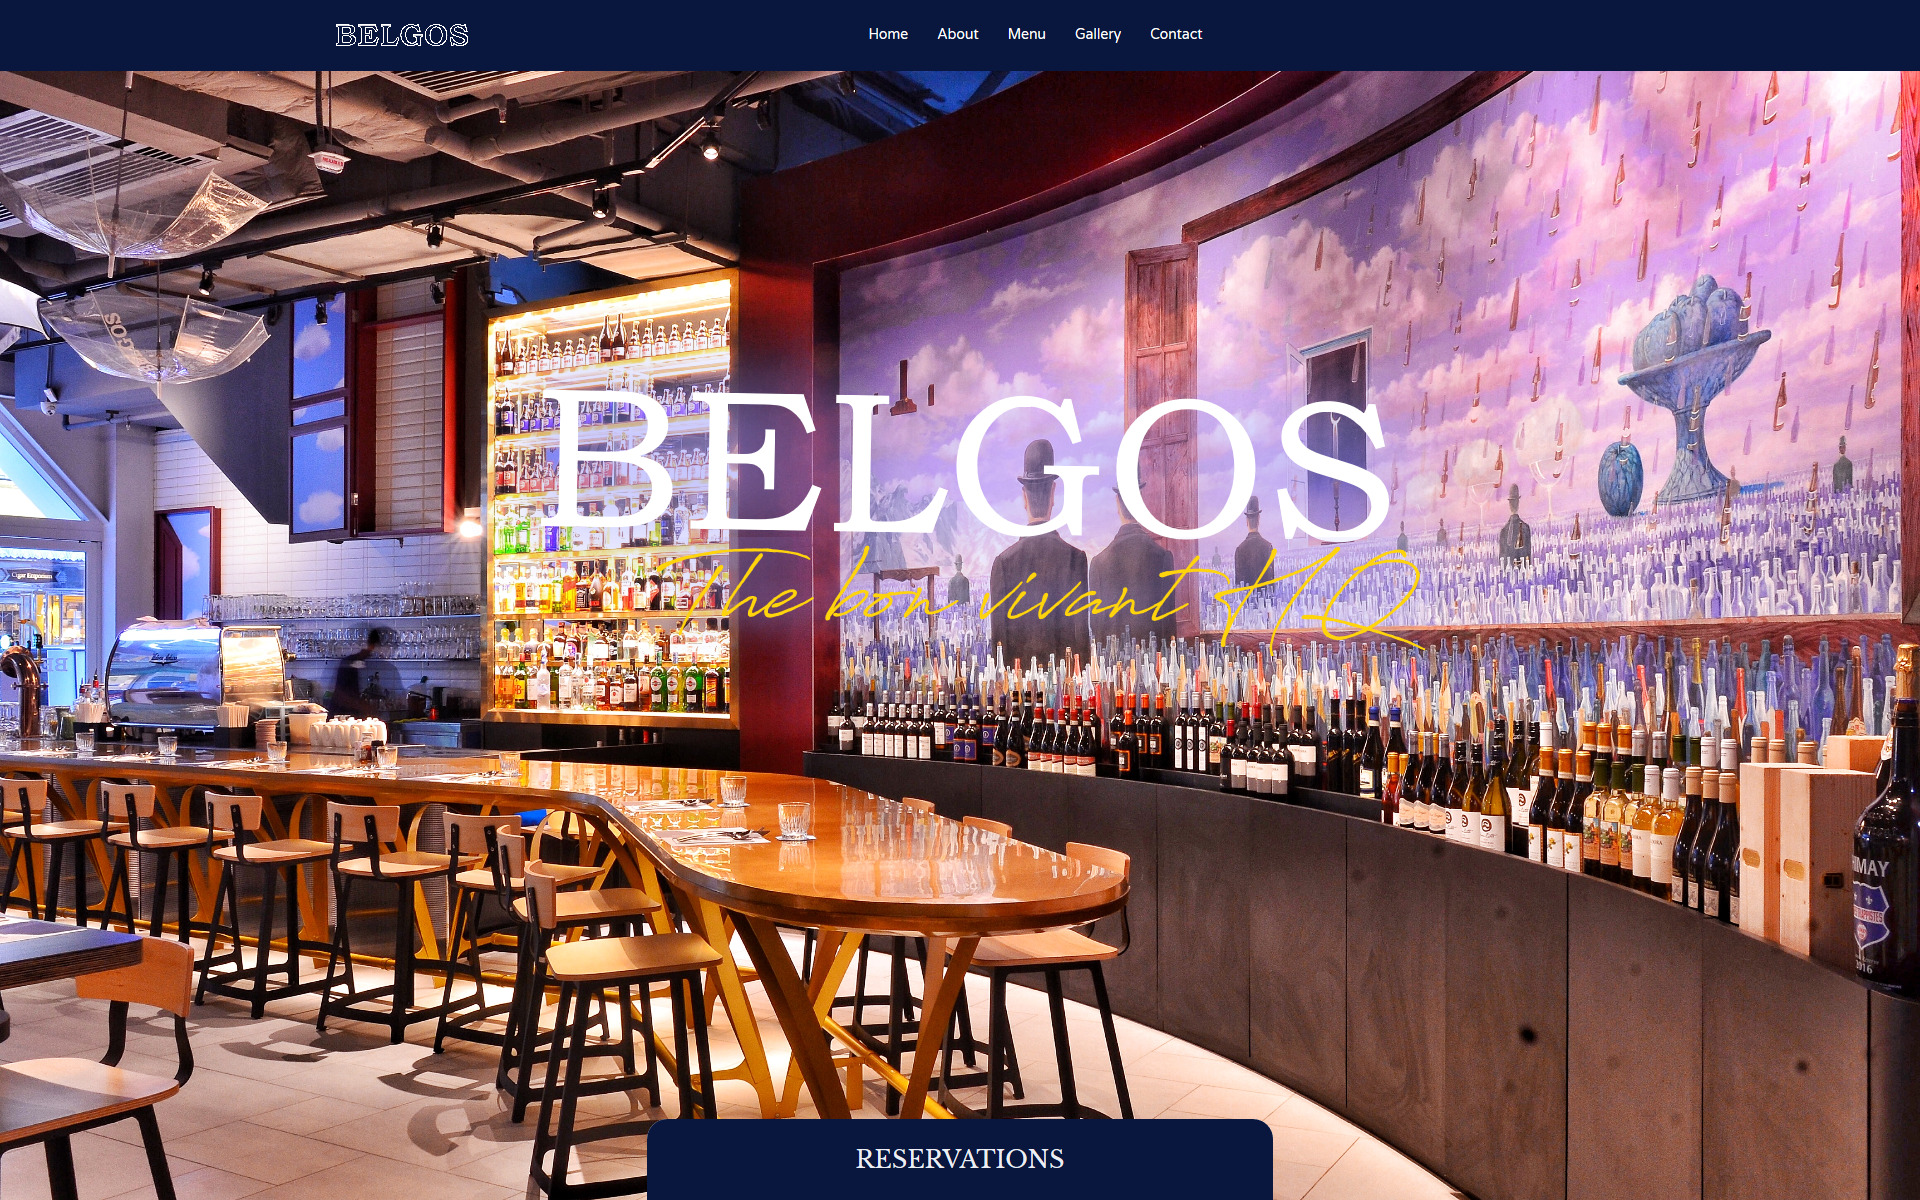 Belgos Bar & Restaurant